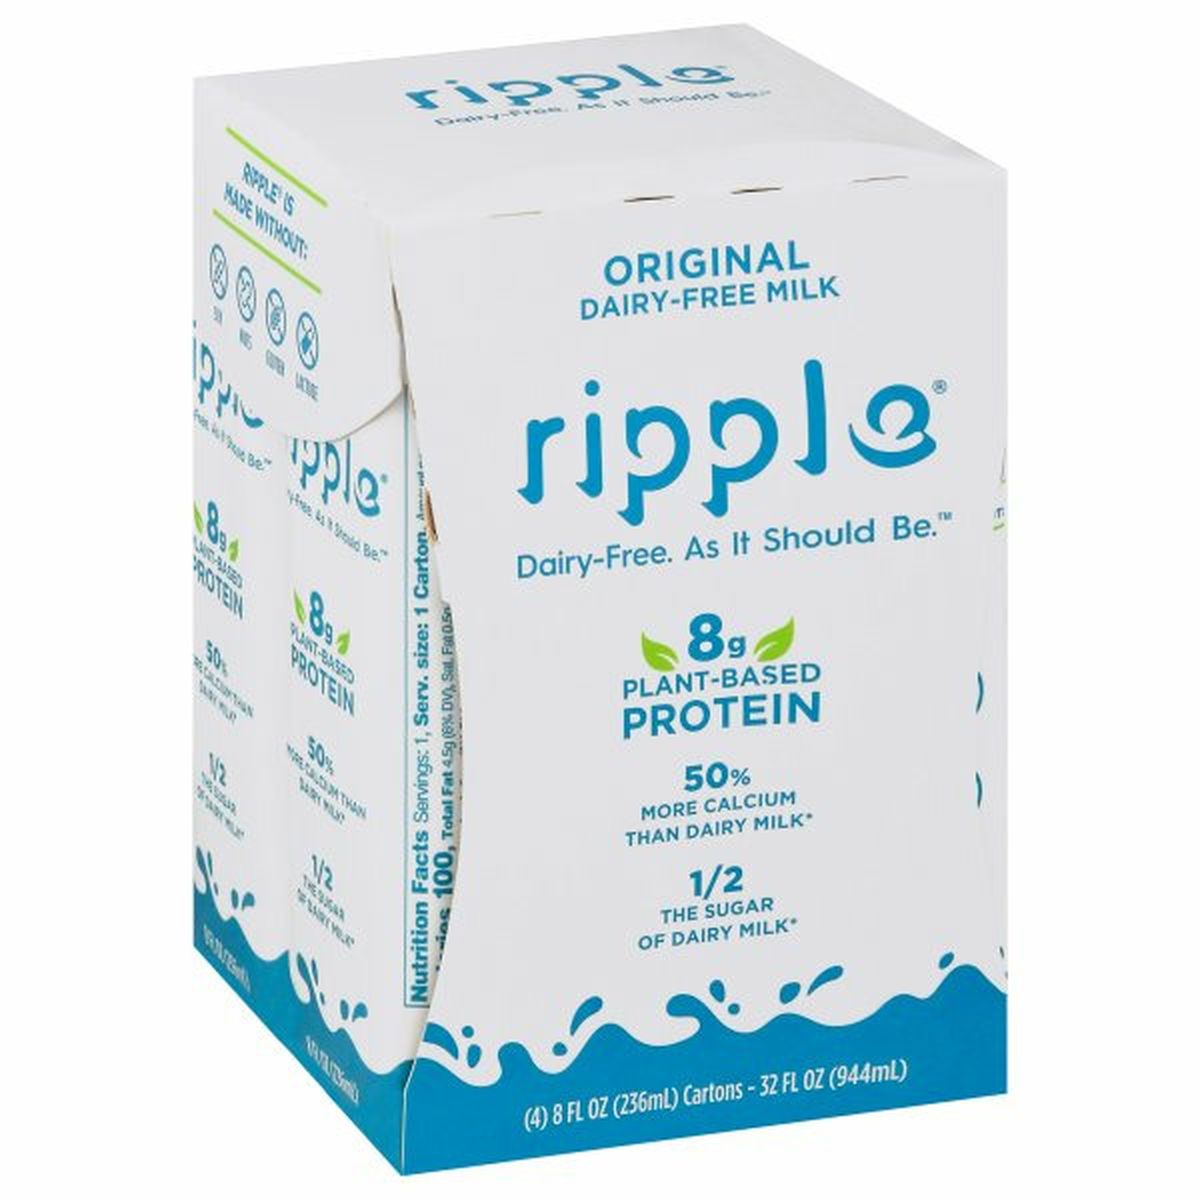 Calories in Ripple Milk, Dairy-Free, Original